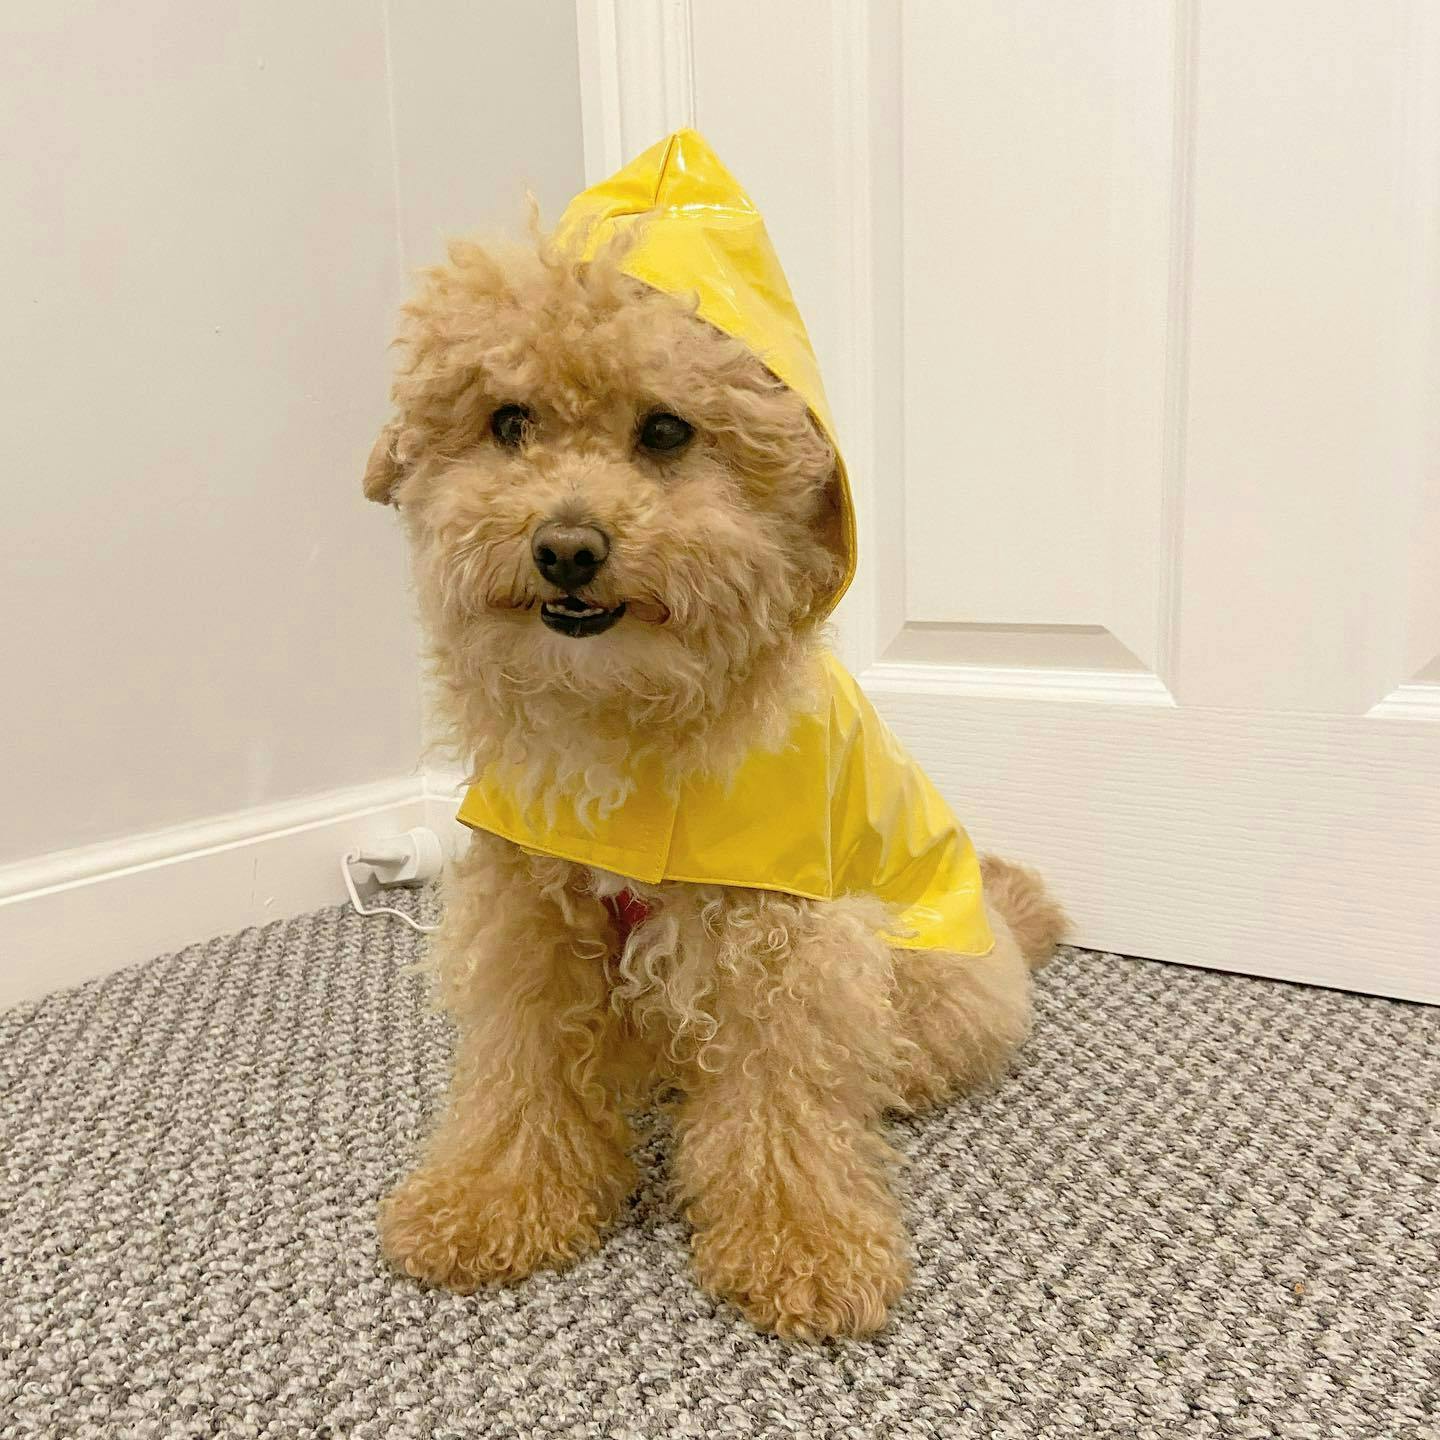 Harry the dog wearing a raincoat